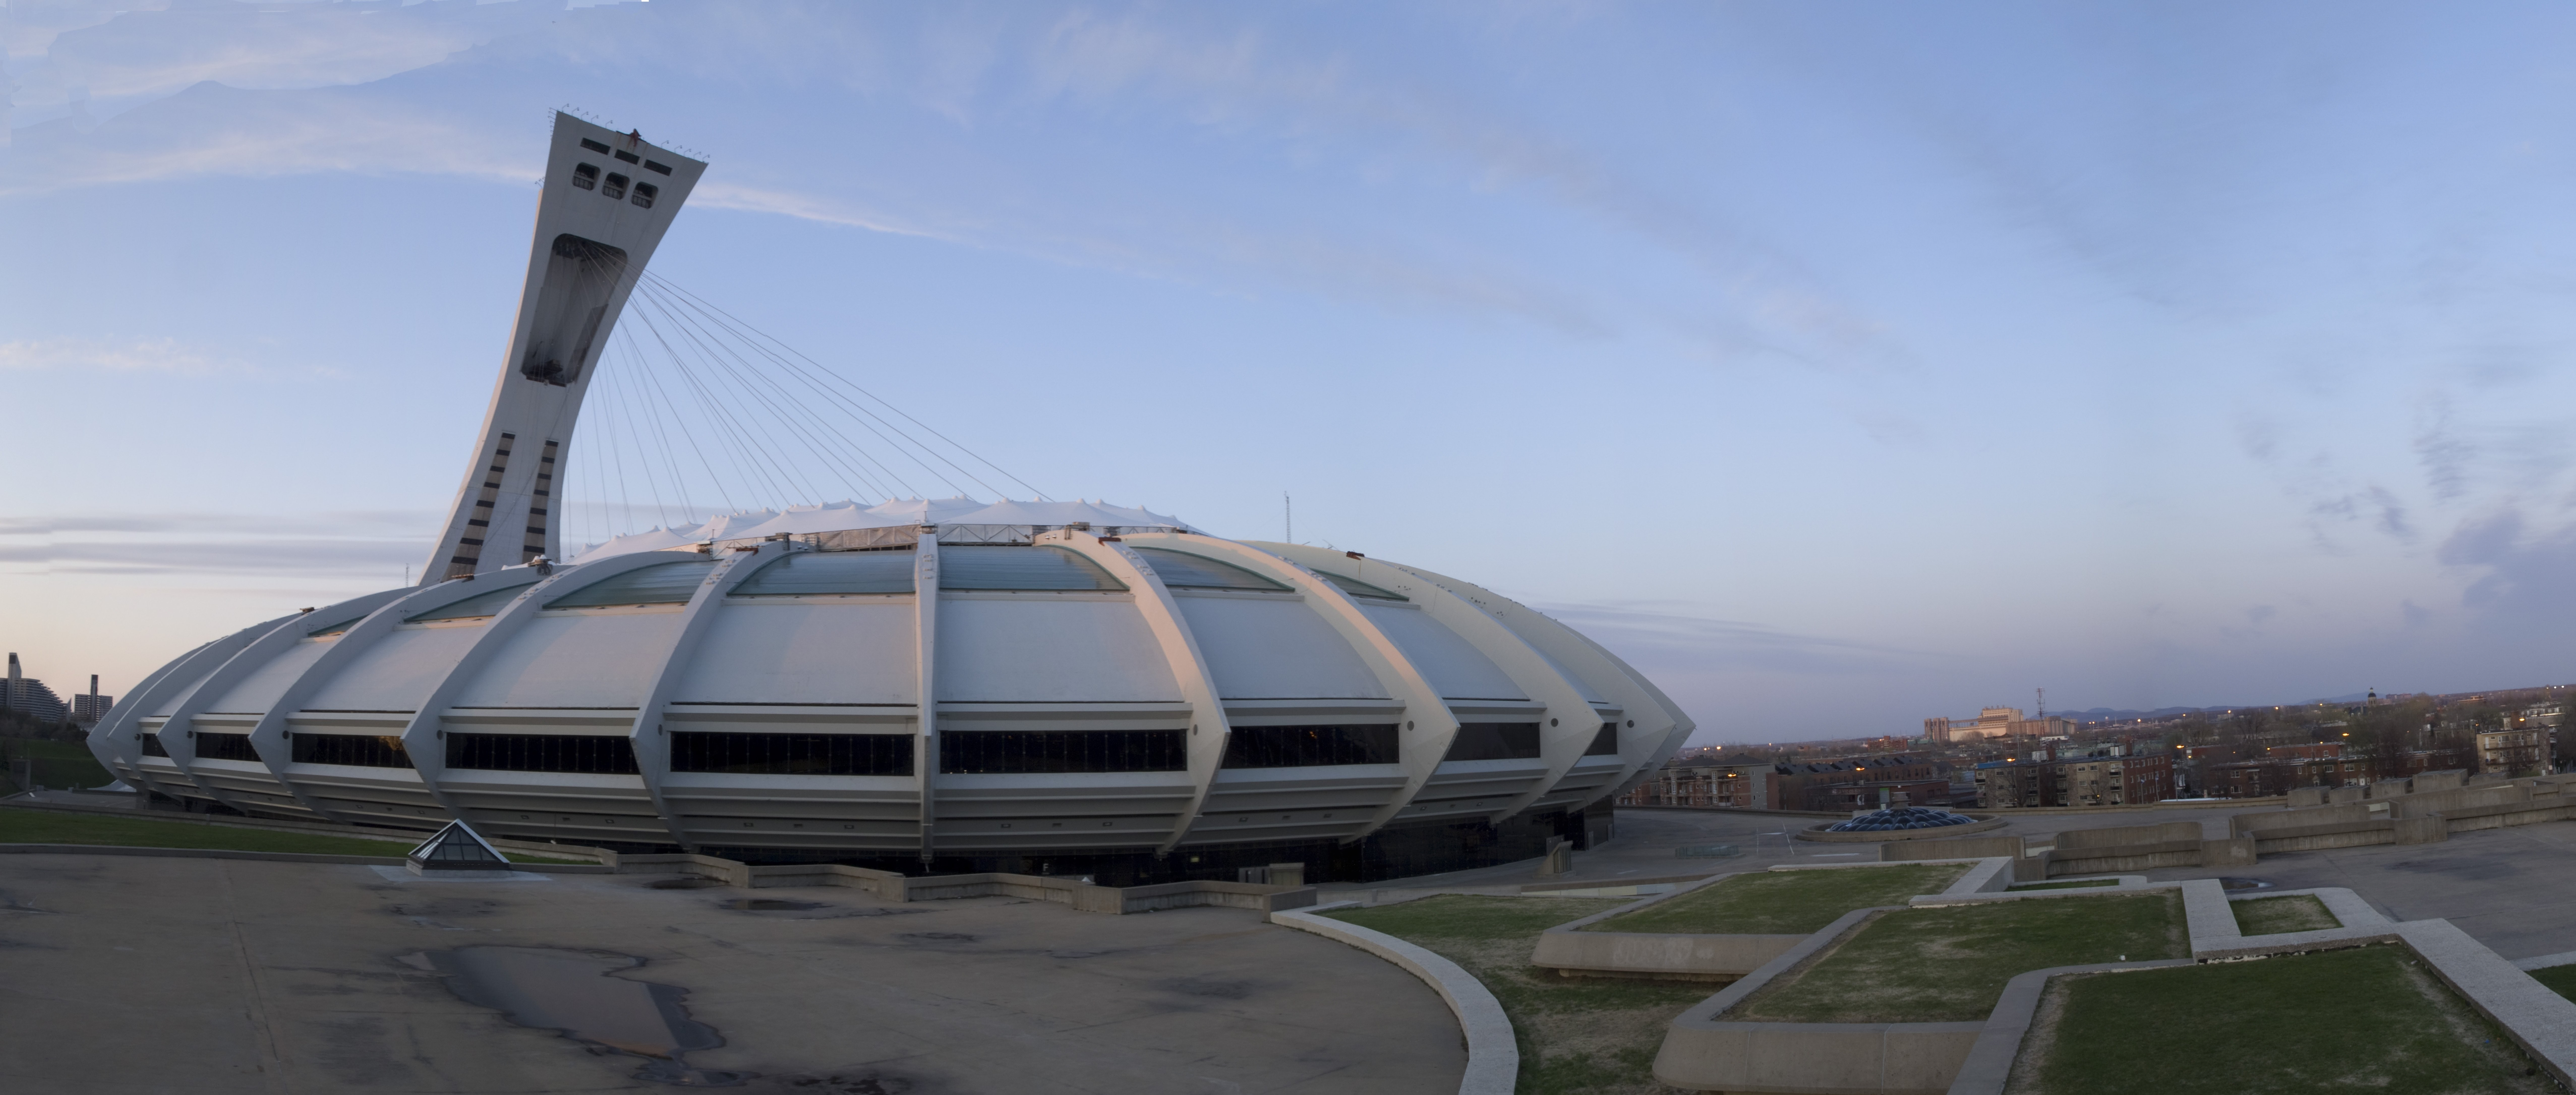 Foto dello stadio olimpico del Quebec